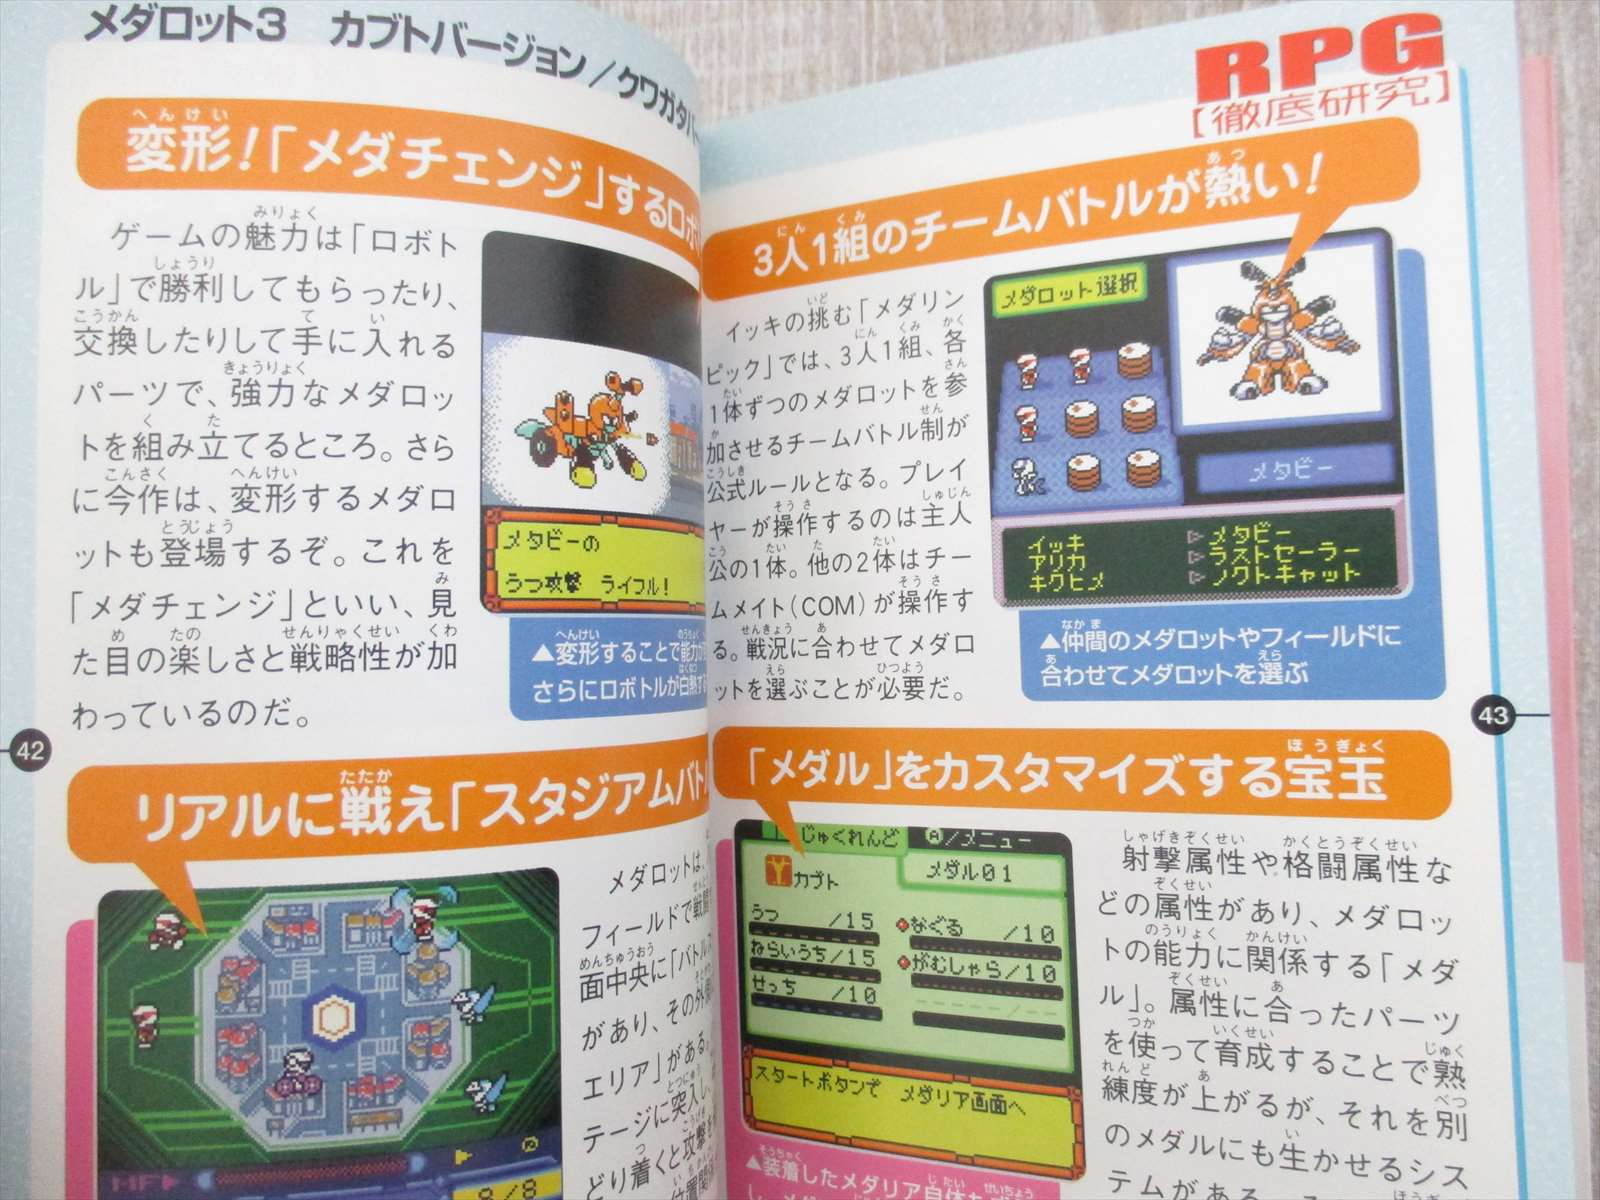 Game Boy Soft Best Guide Star Ocean Rockman X Medarot 3 Cheat Book 00 Jn31 Ebay